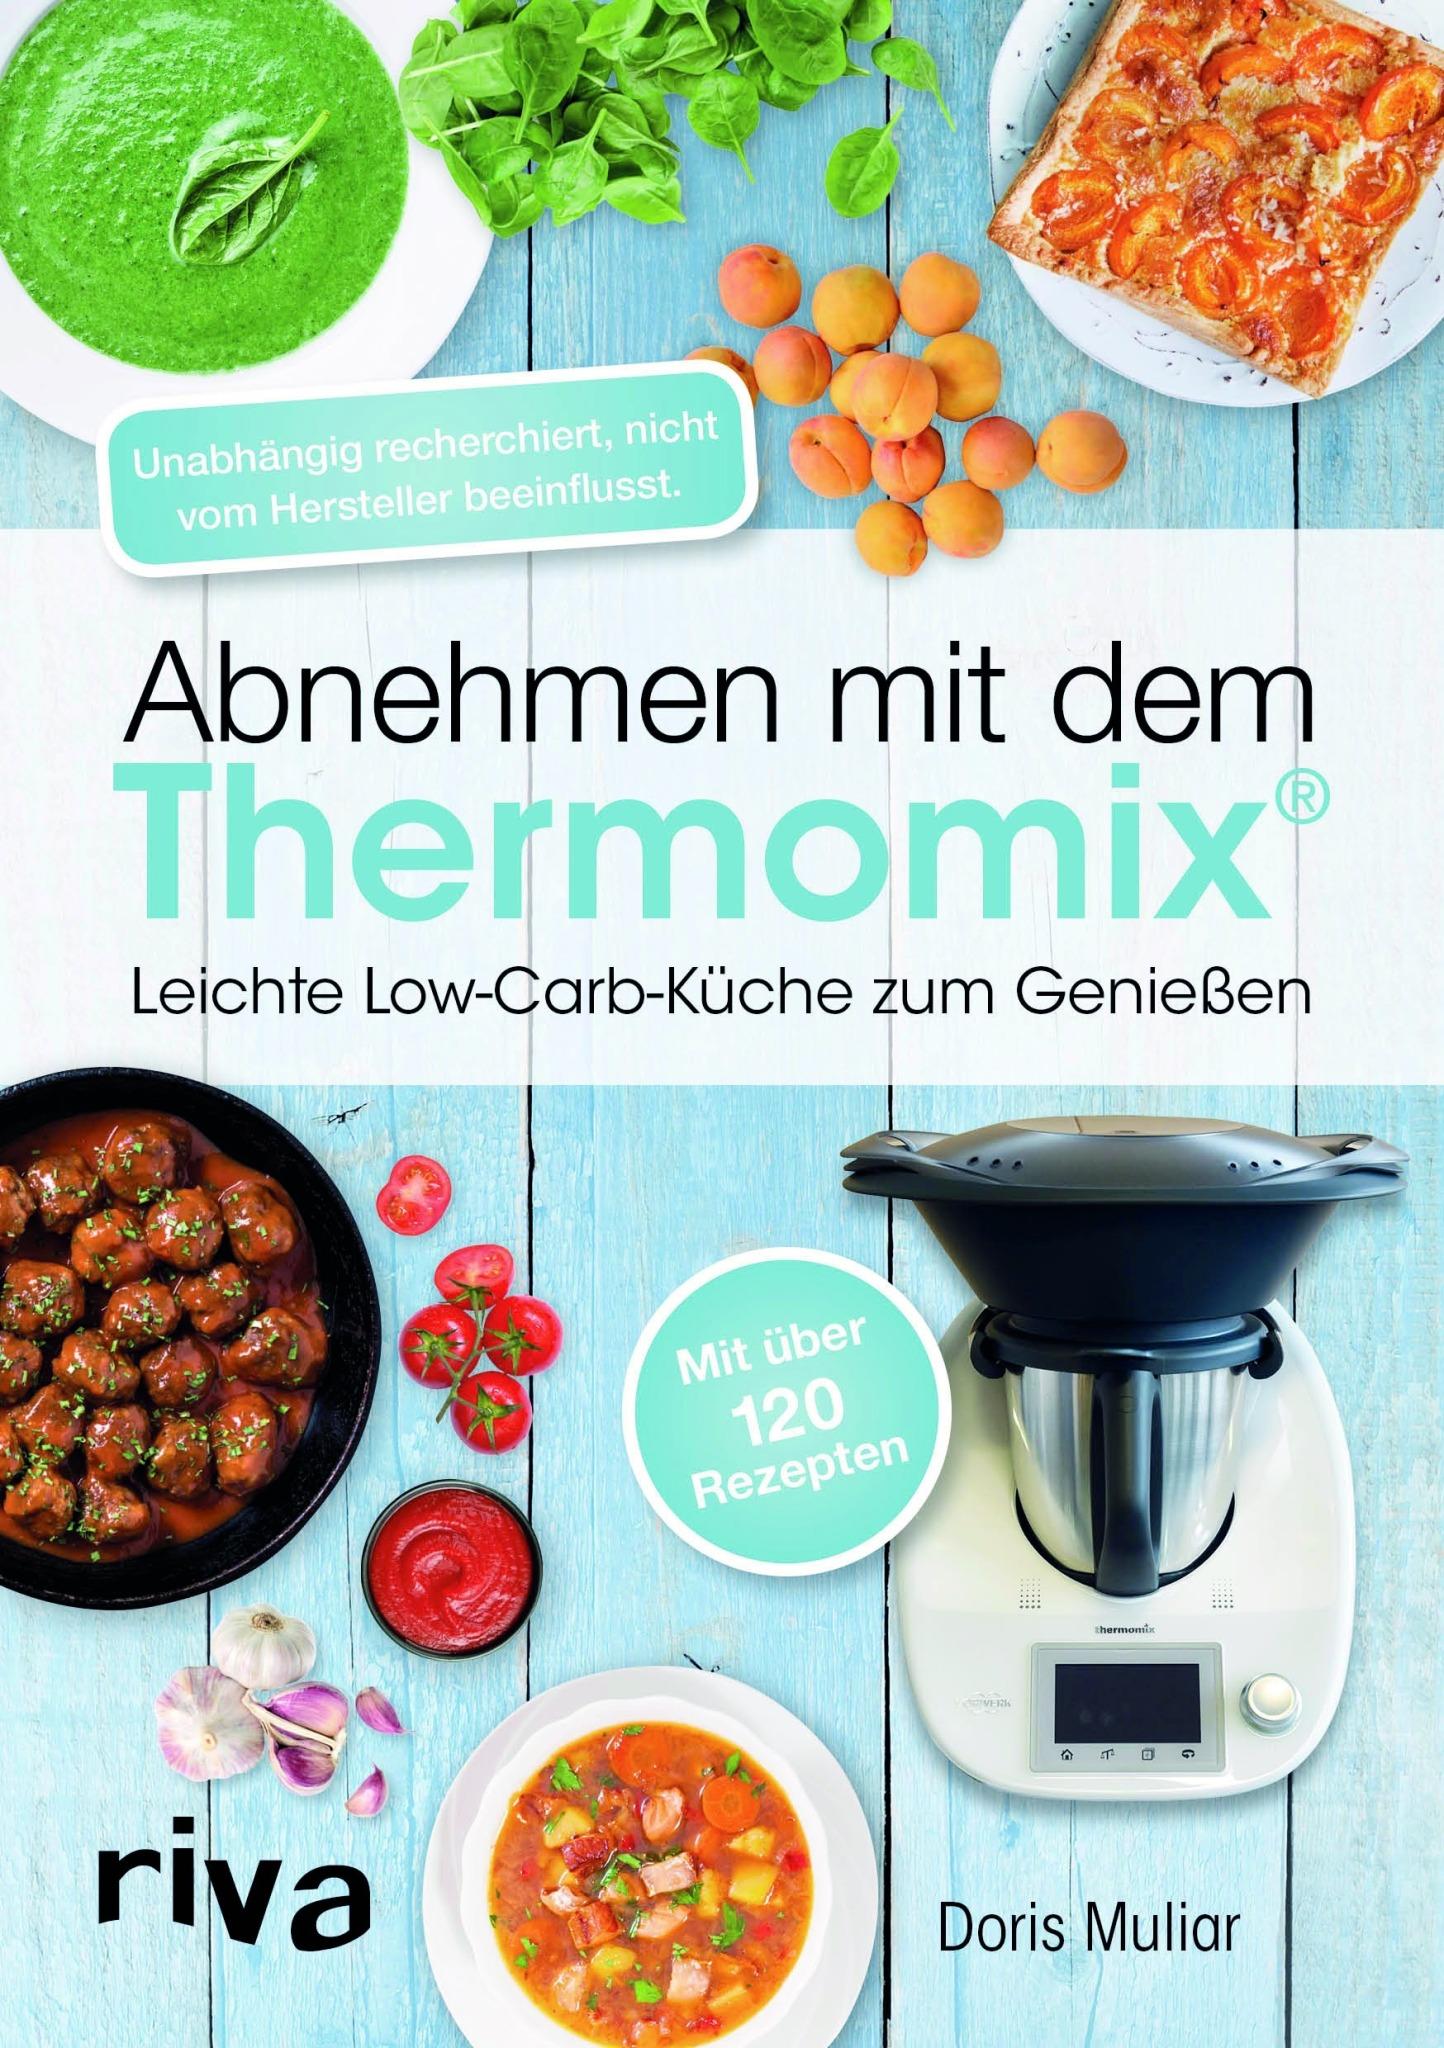 Abnehmen mit dem Thermomix: Tolle Rezepte für leckere Low-Carb-Gerichte